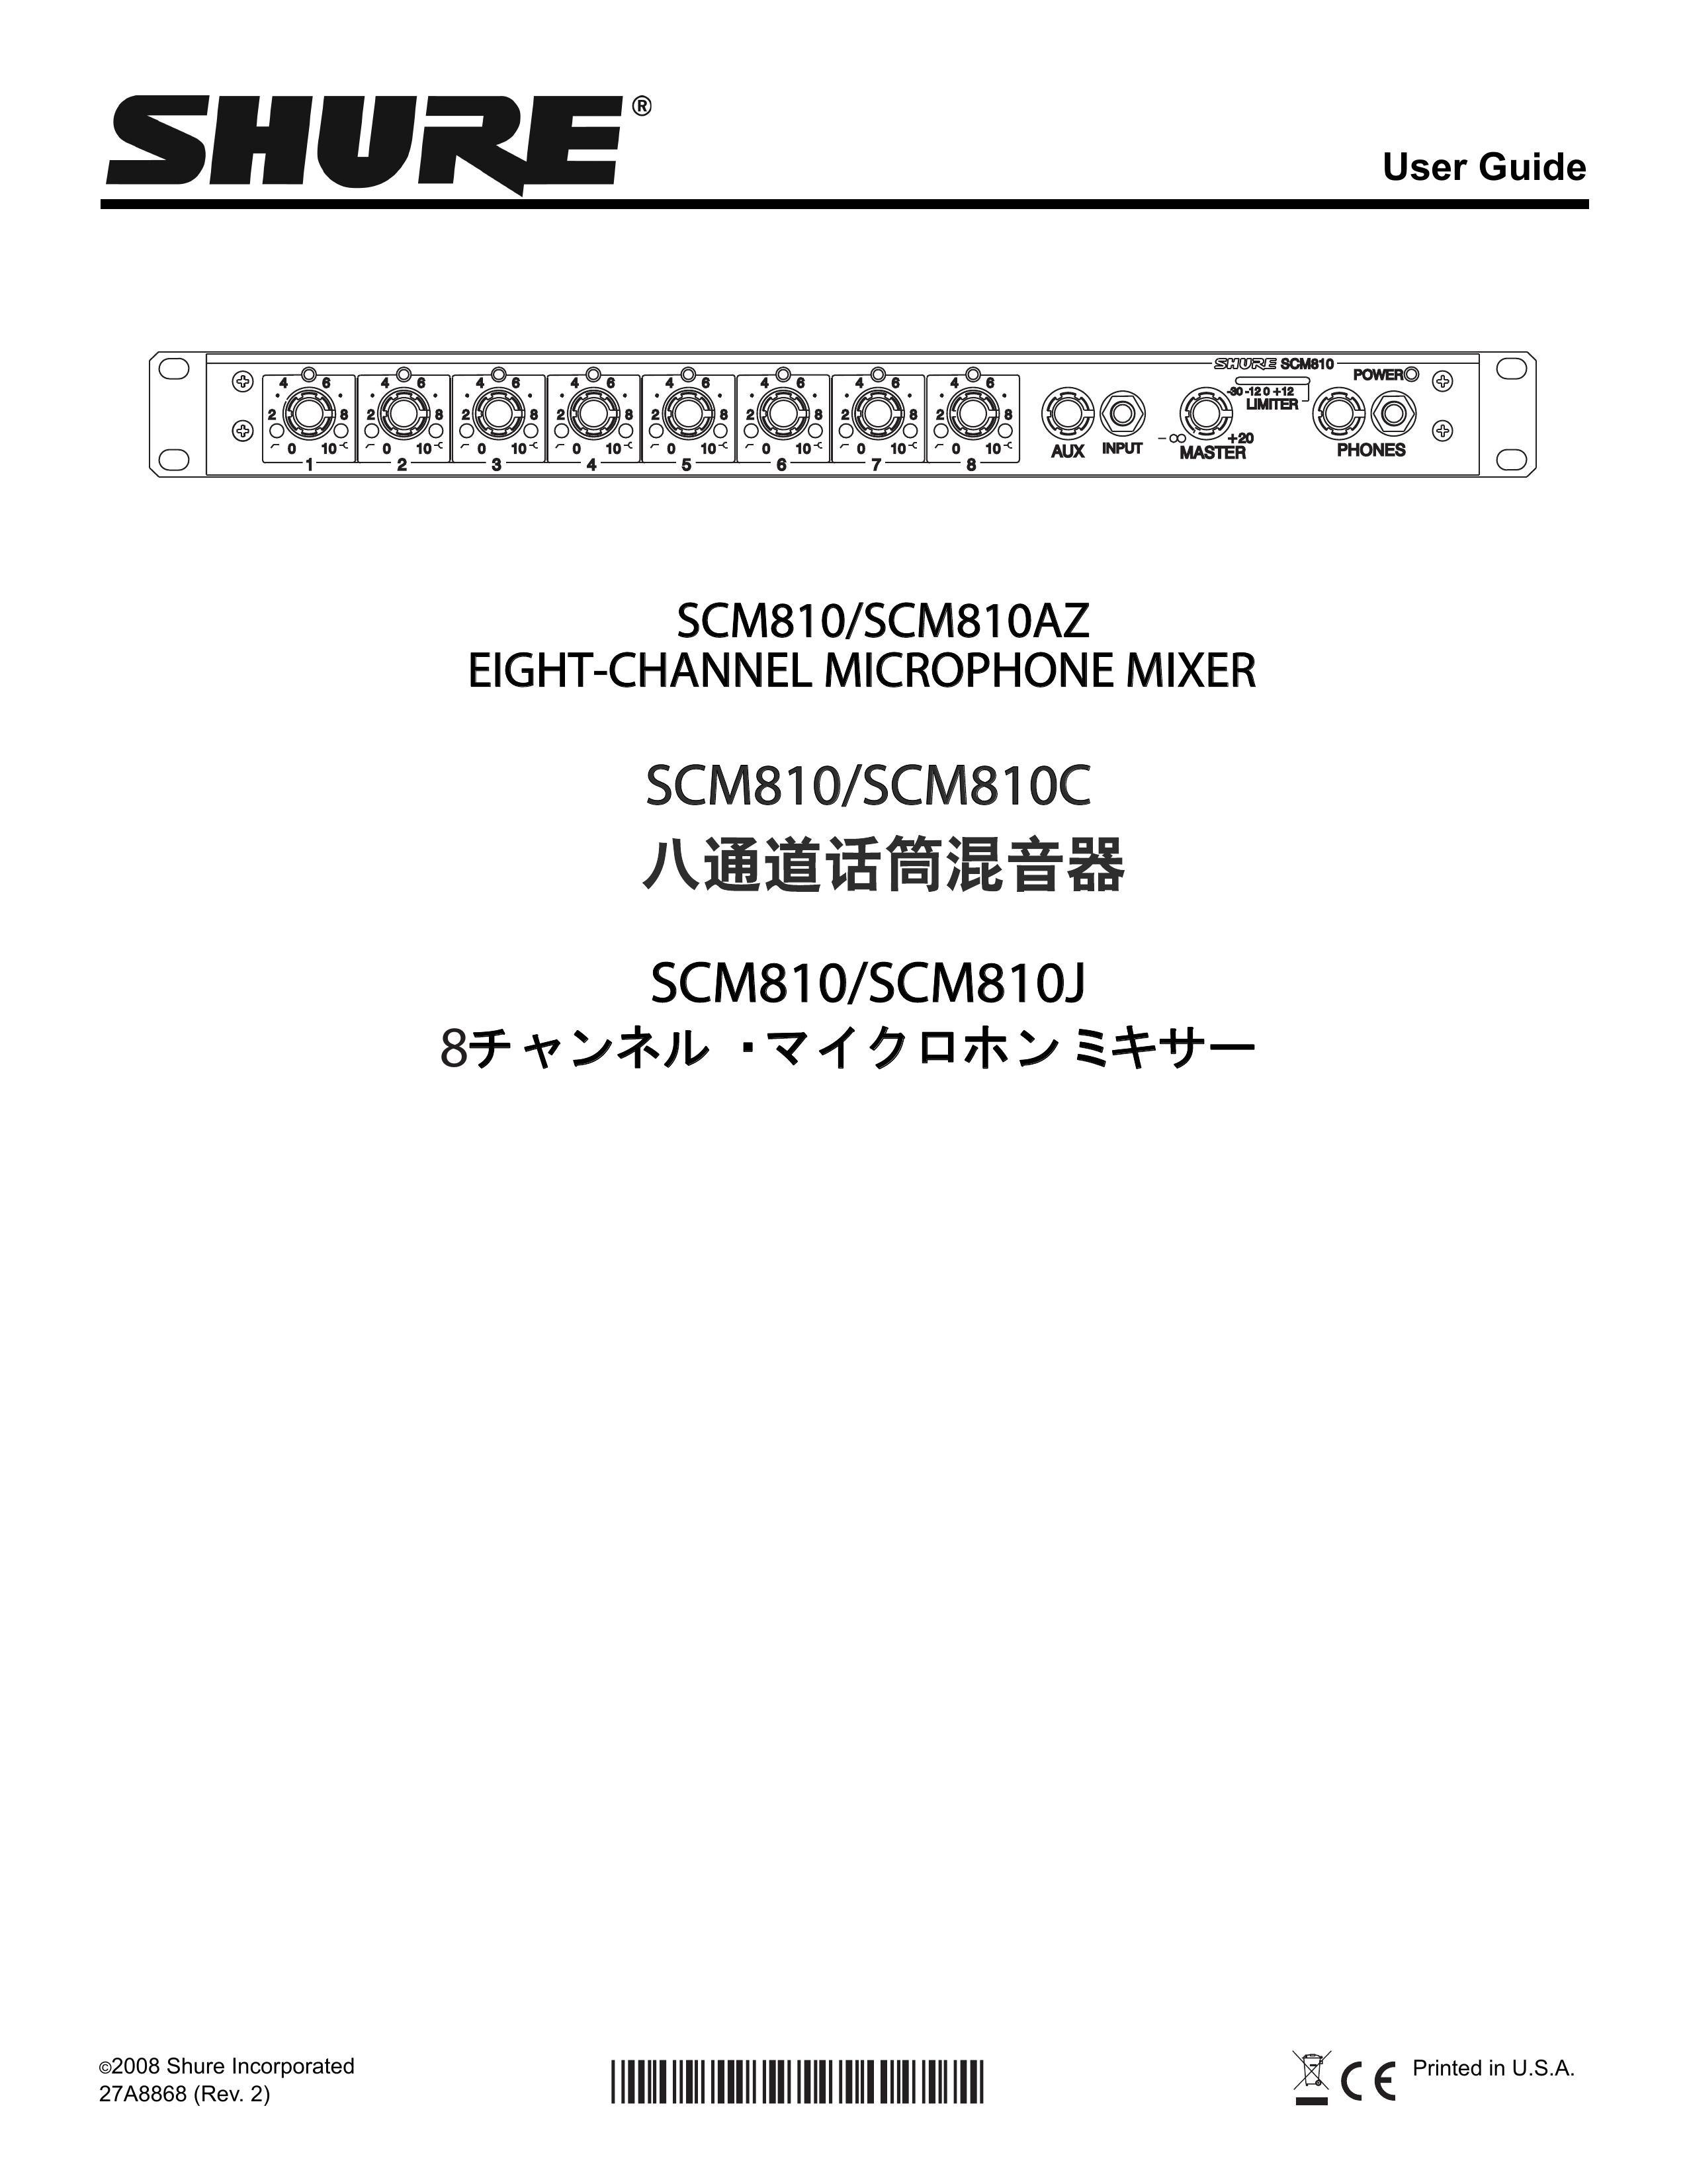 Shure SCM810 Musical Instrument User Manual